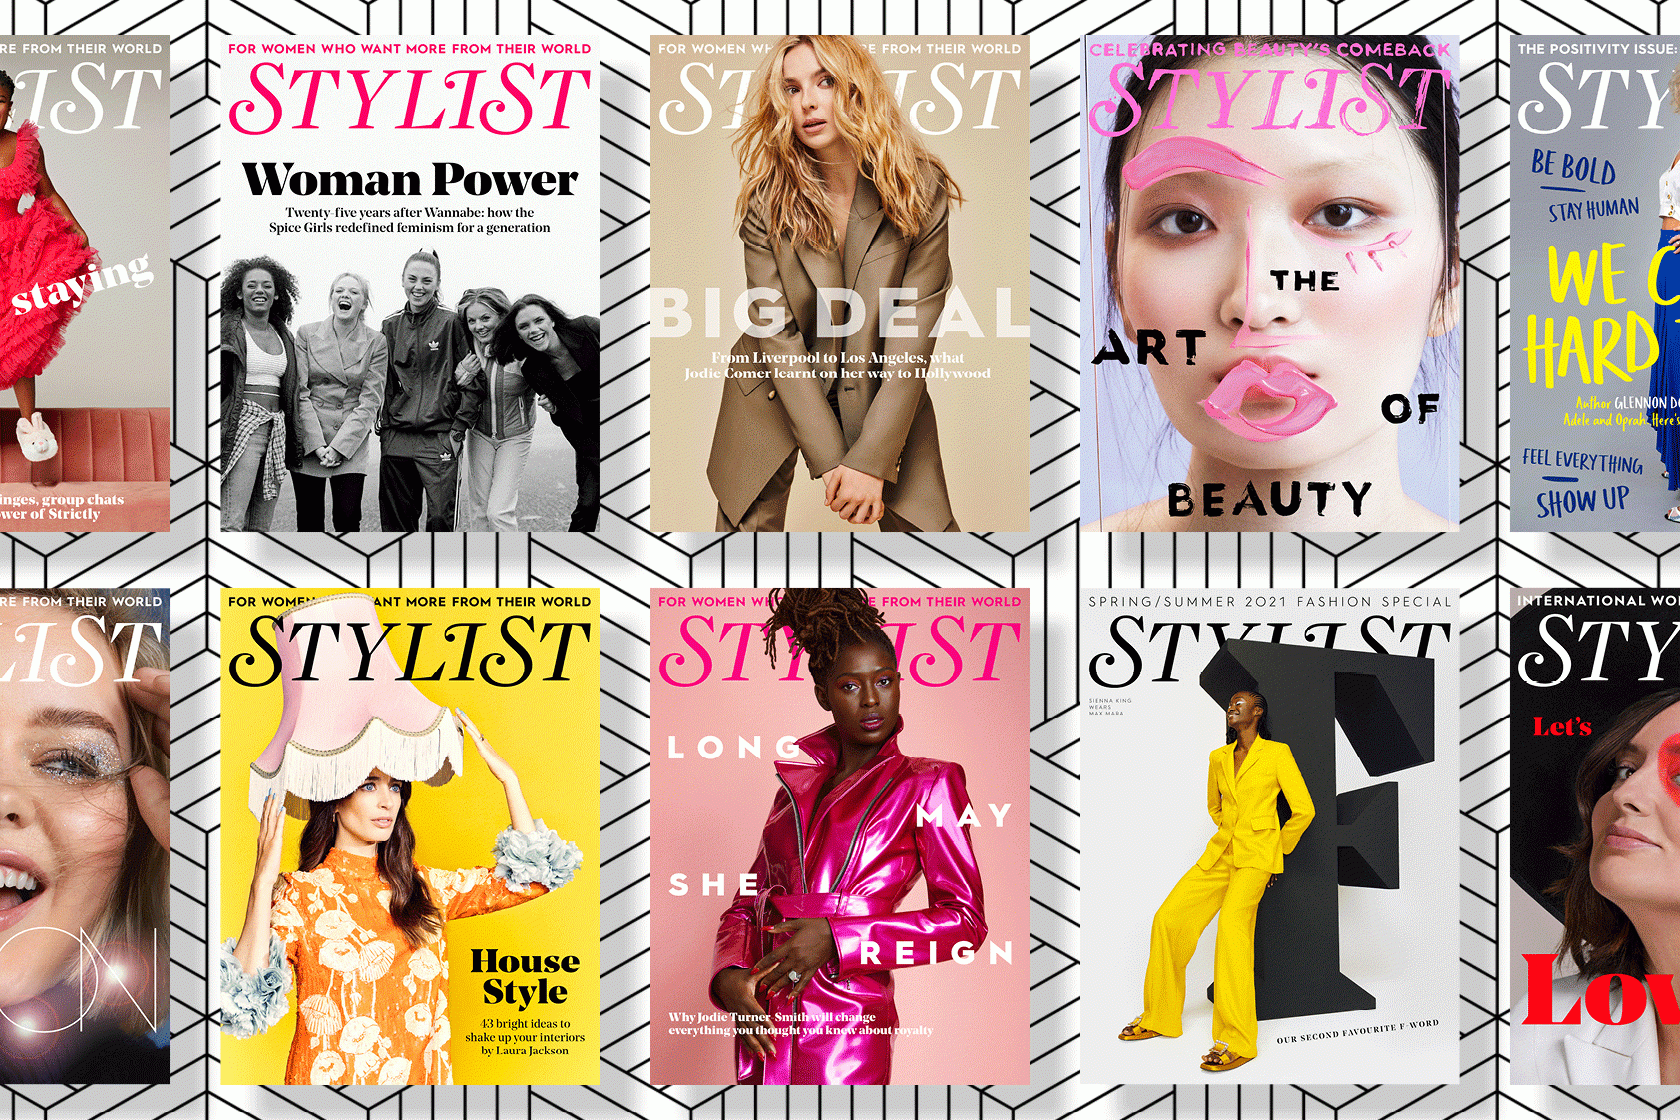 Stylist Magazine covers